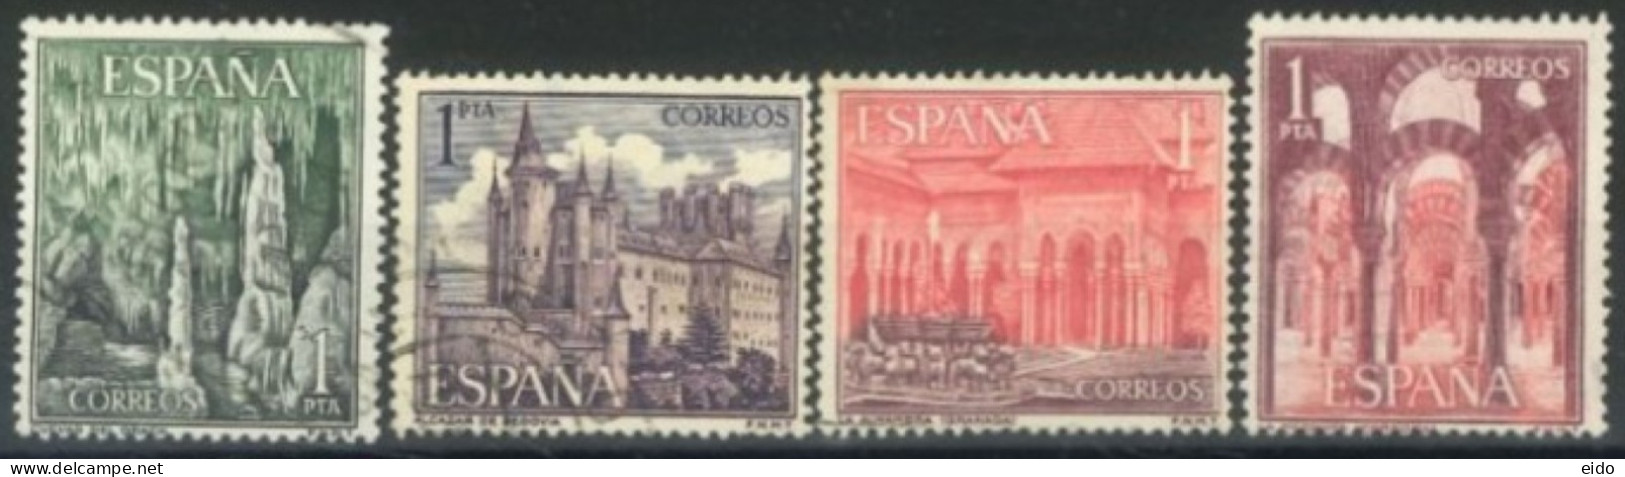 SPAIN, 1964, TORISM STAMPS SET OF 4, # 1205/08, USED. - Usados